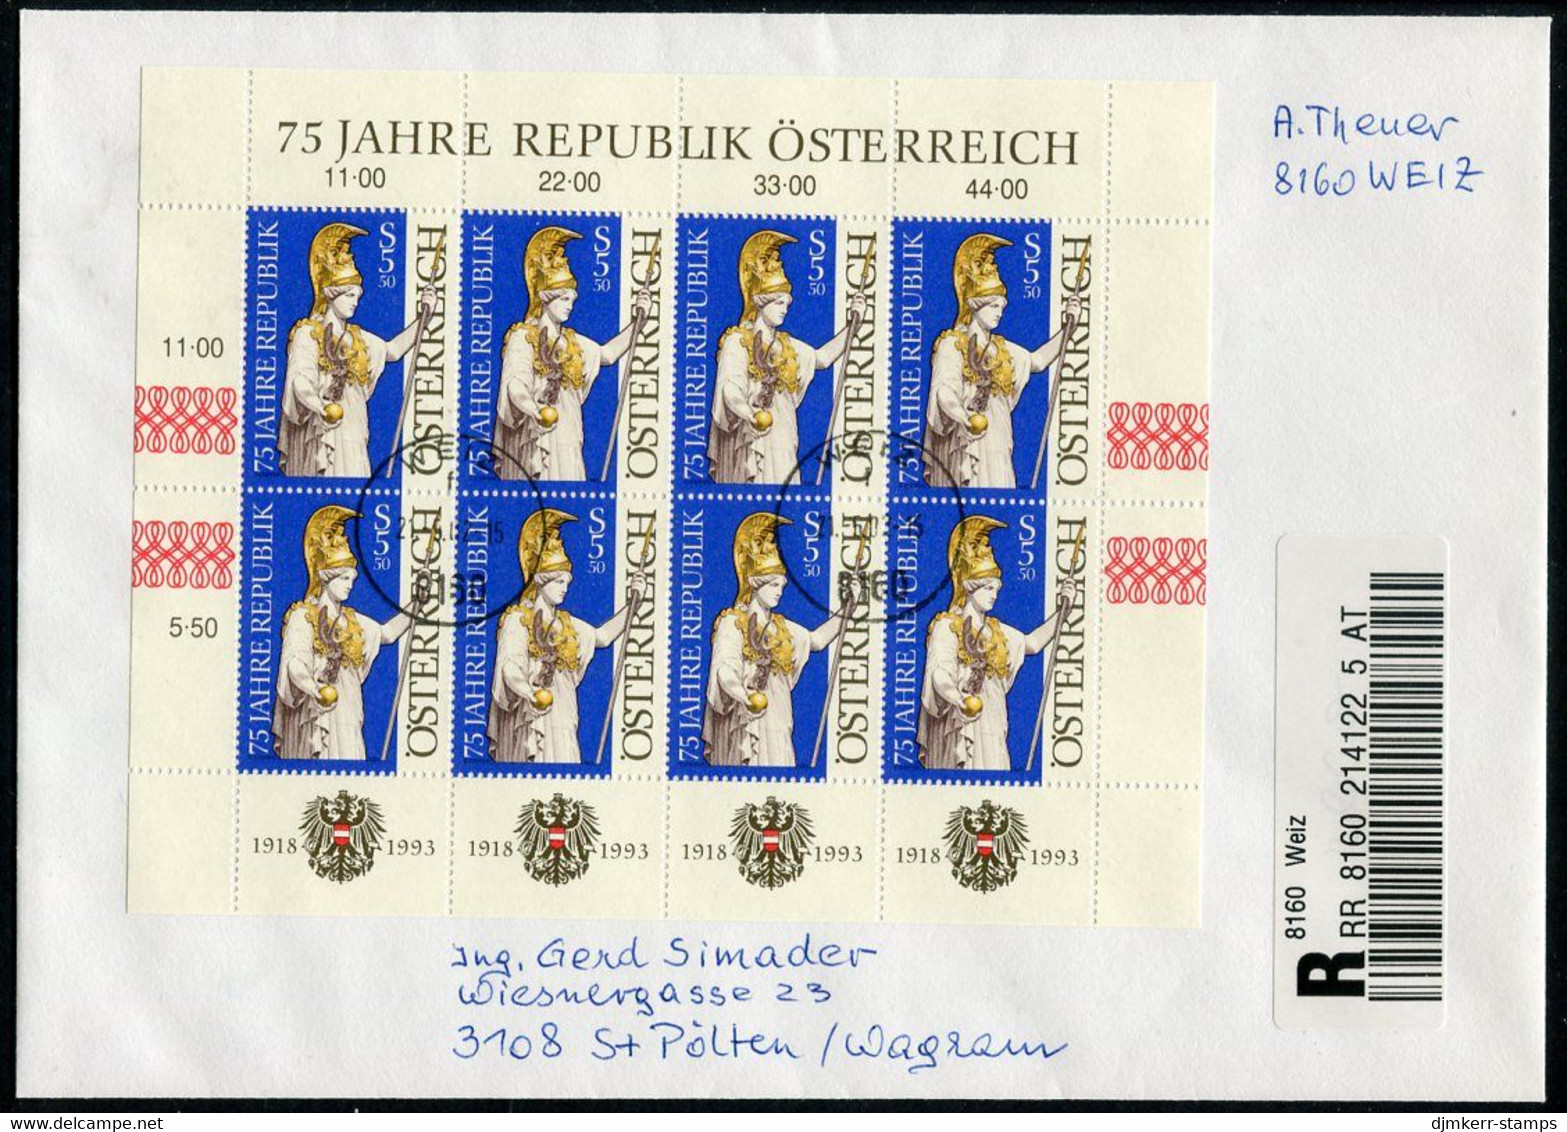 AUSTRIA 1993 Anniversary Of Republic Sheetlet, Postally Used On Registered Cover.  Michel 2113 Kb - Blocks & Kleinbögen